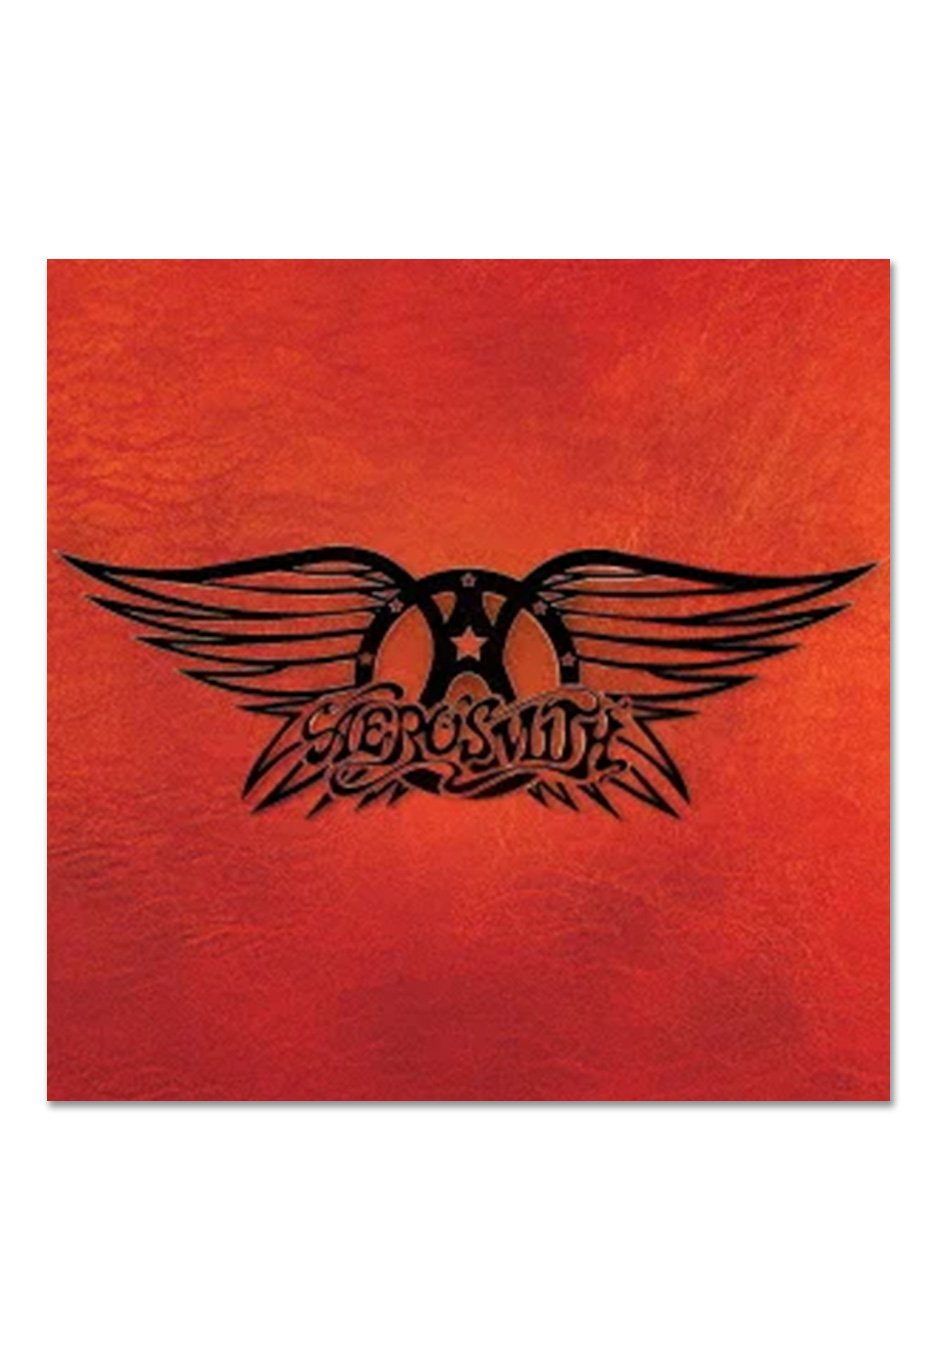 Aerosmith - Greatest Hits - Vinyl